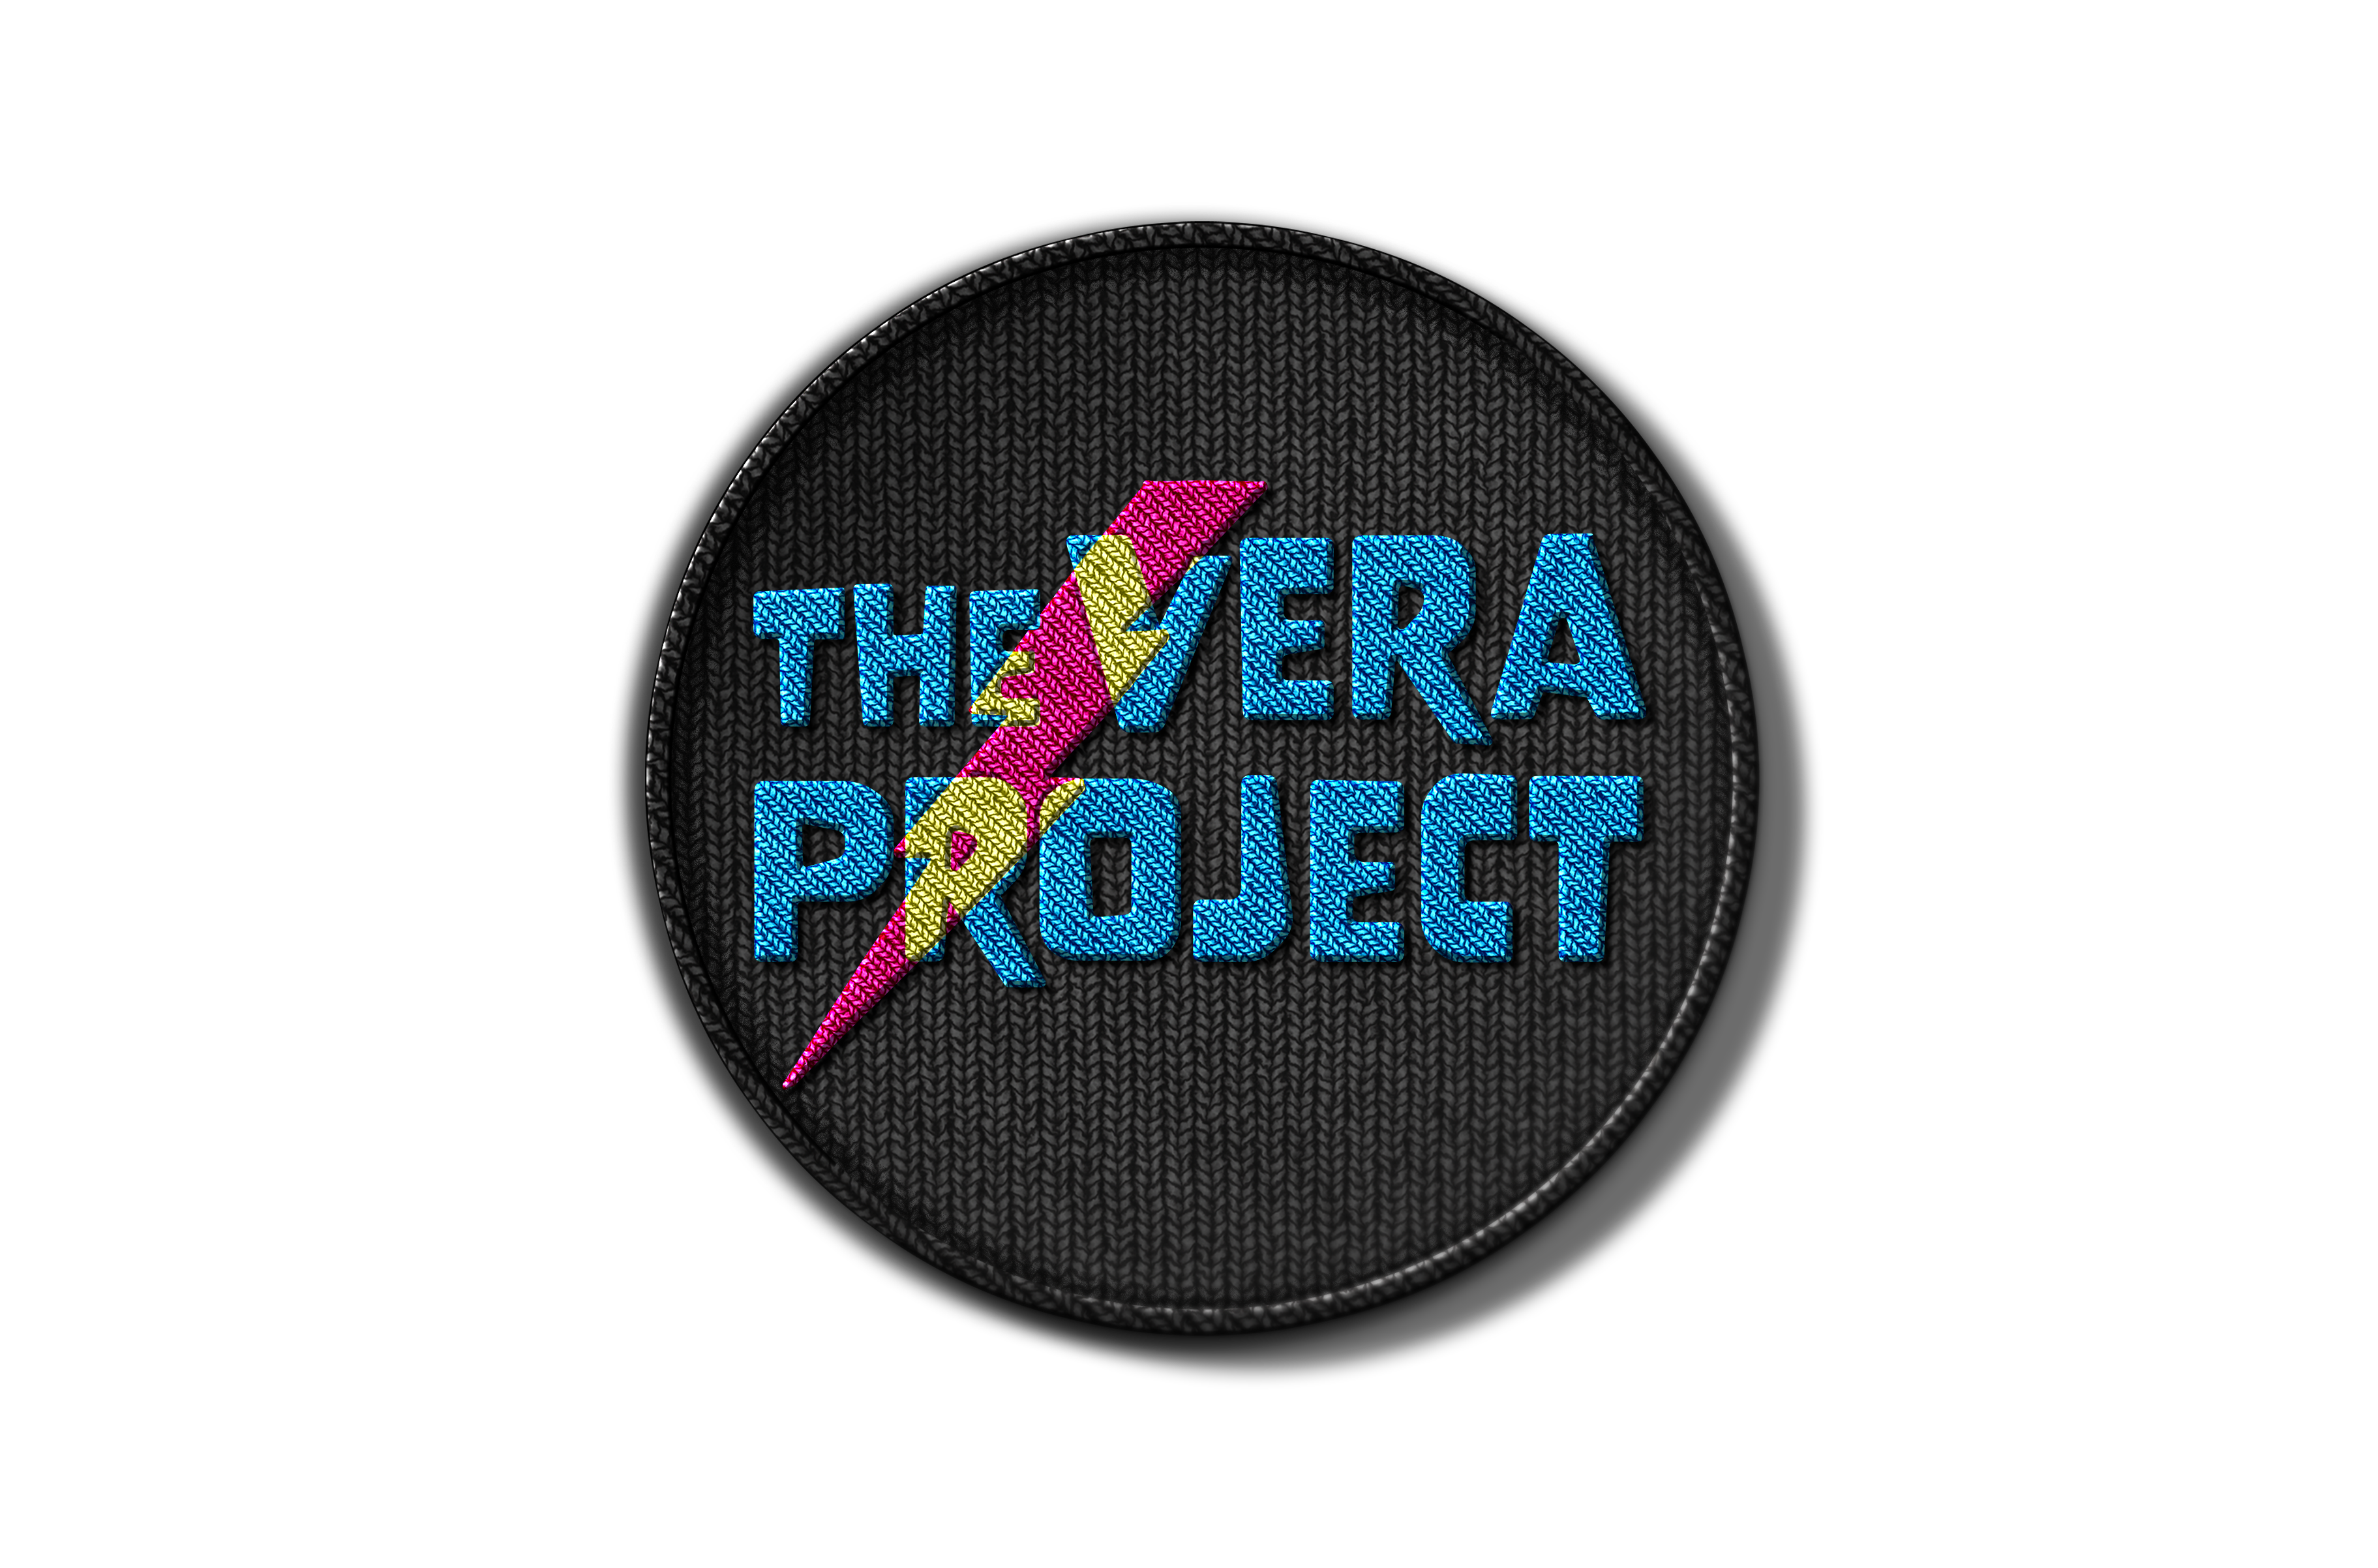 The Vera Project Jake Levin